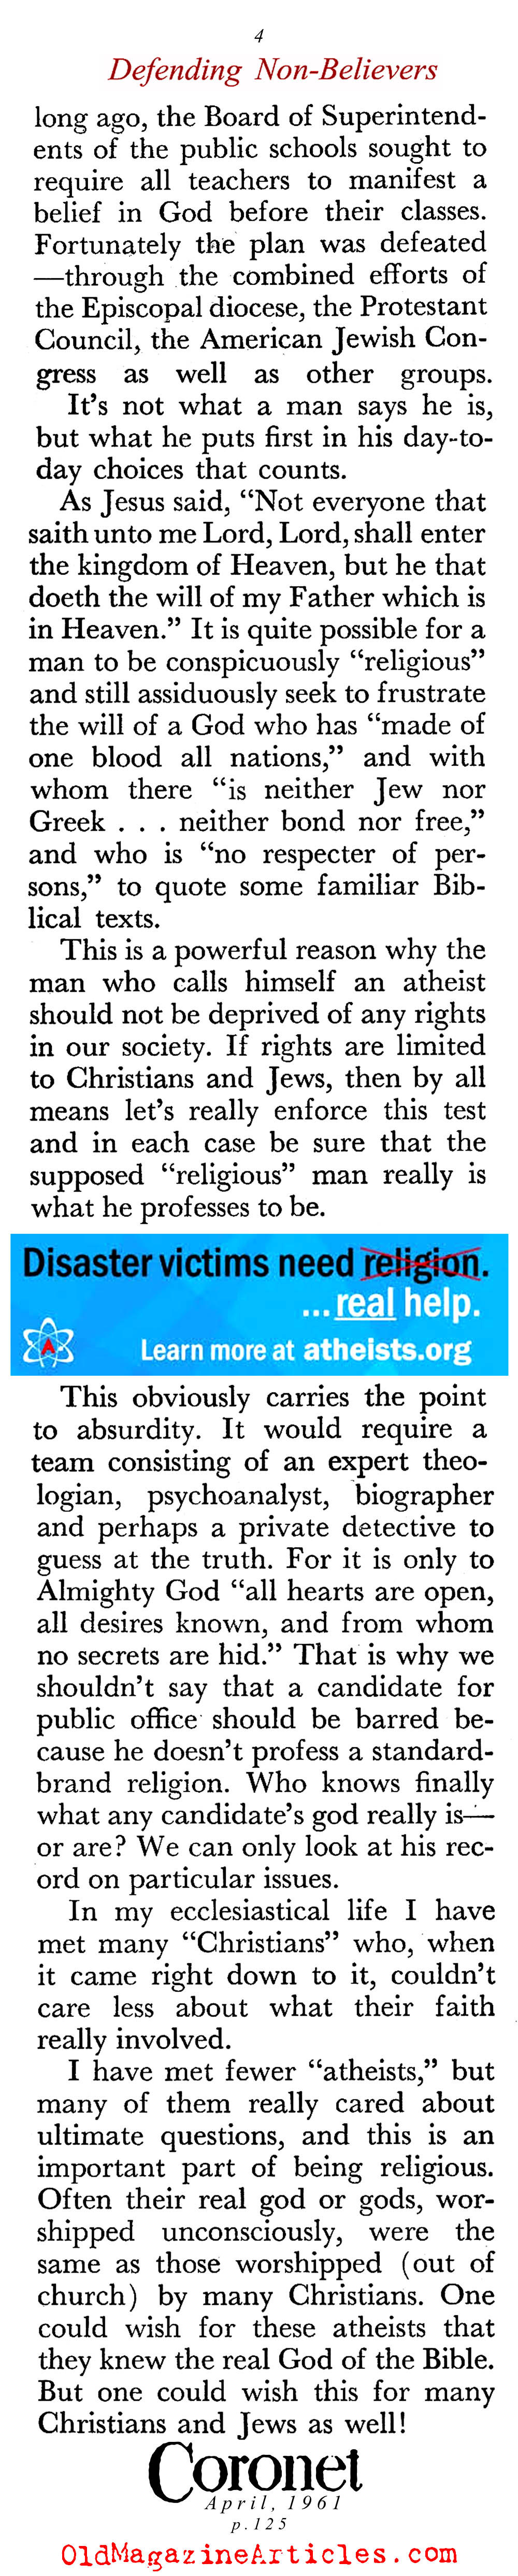 A Christian Defends Atheists (Coronet Magazine, 1961)